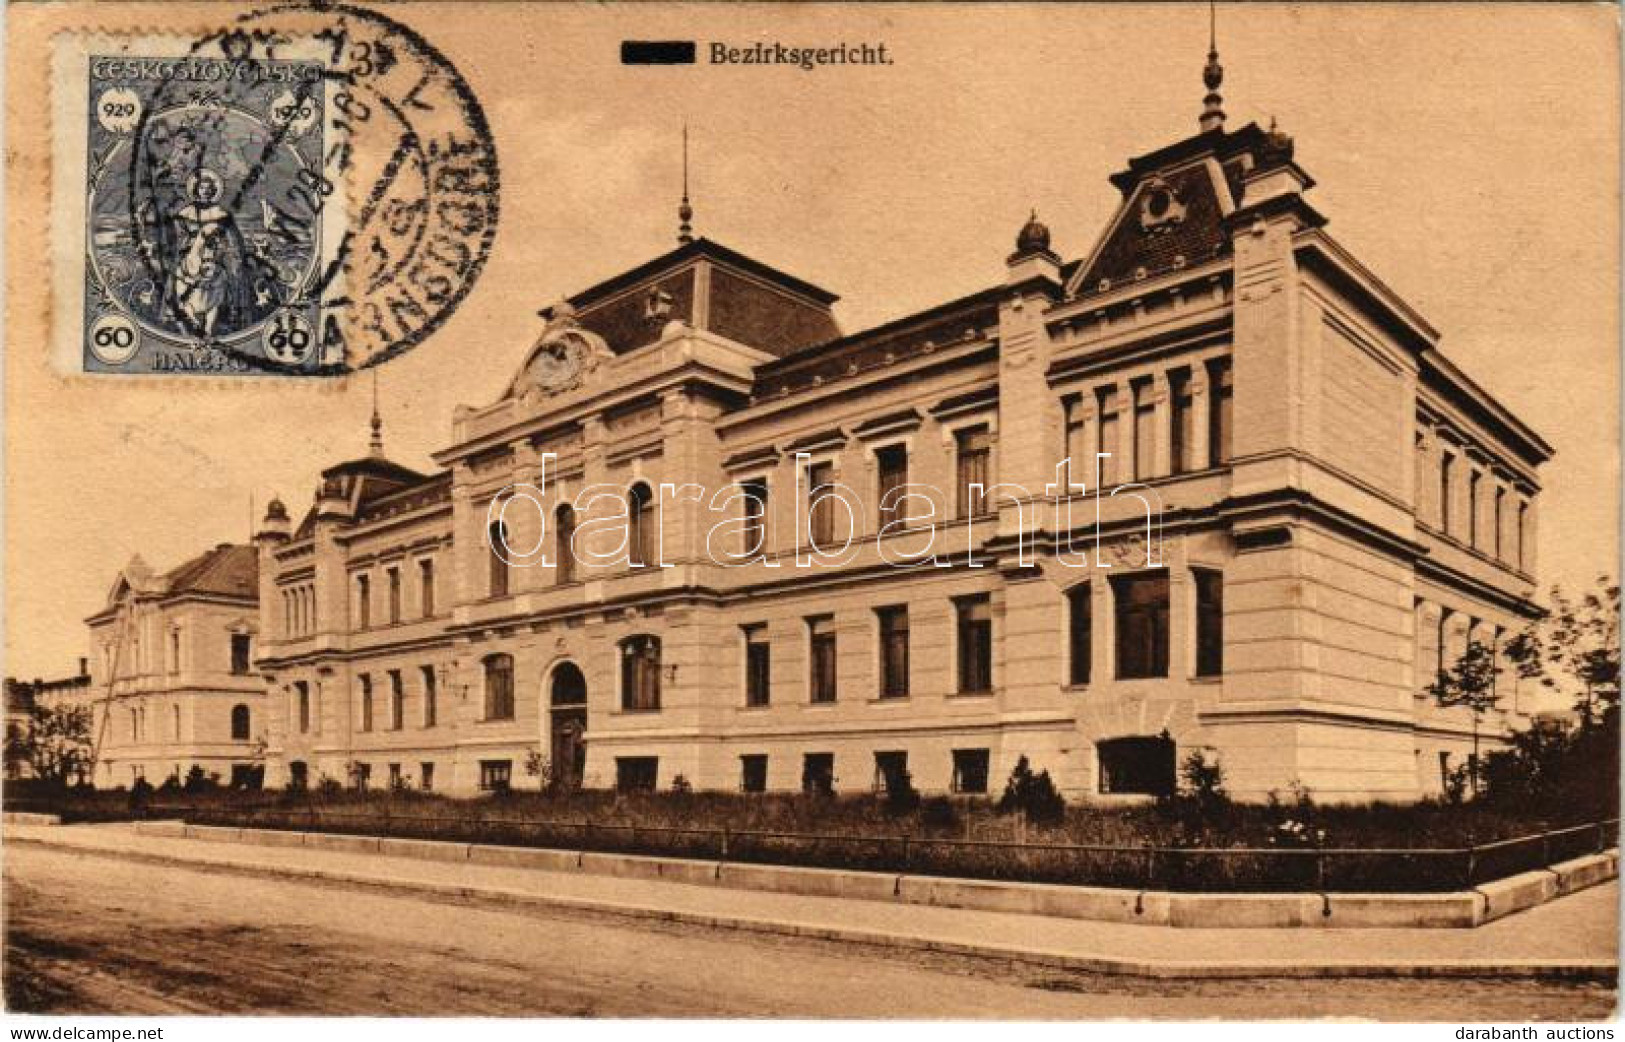 T3 1929 Varnsdorf, Warnsdorf; Bezirksgericht / District Court (EB) - Unclassified